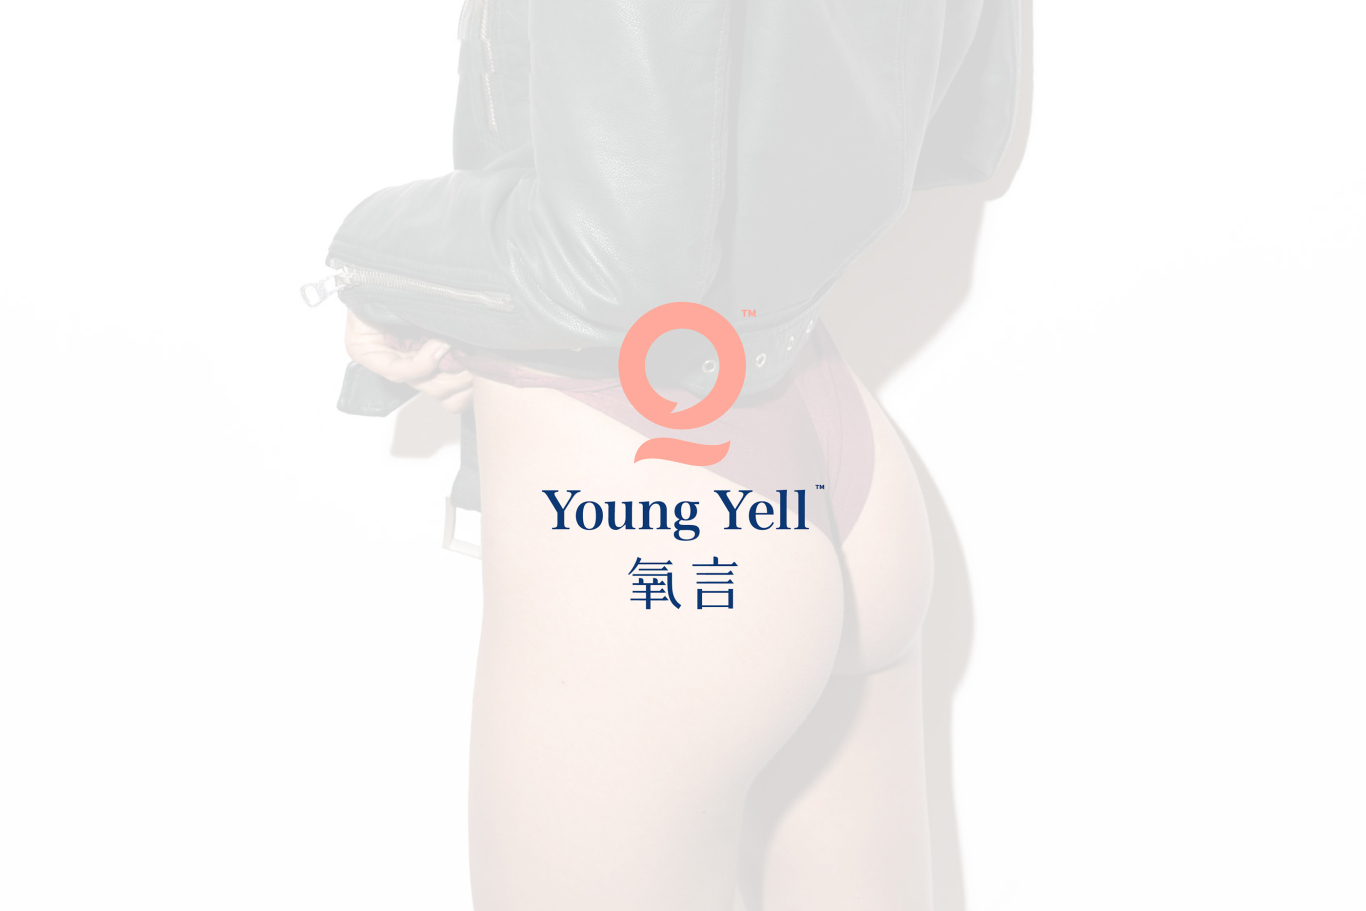 氧言品牌VI设计 Young Yell Brand VI Design | 高端内衣服装行业LOGO设计图0